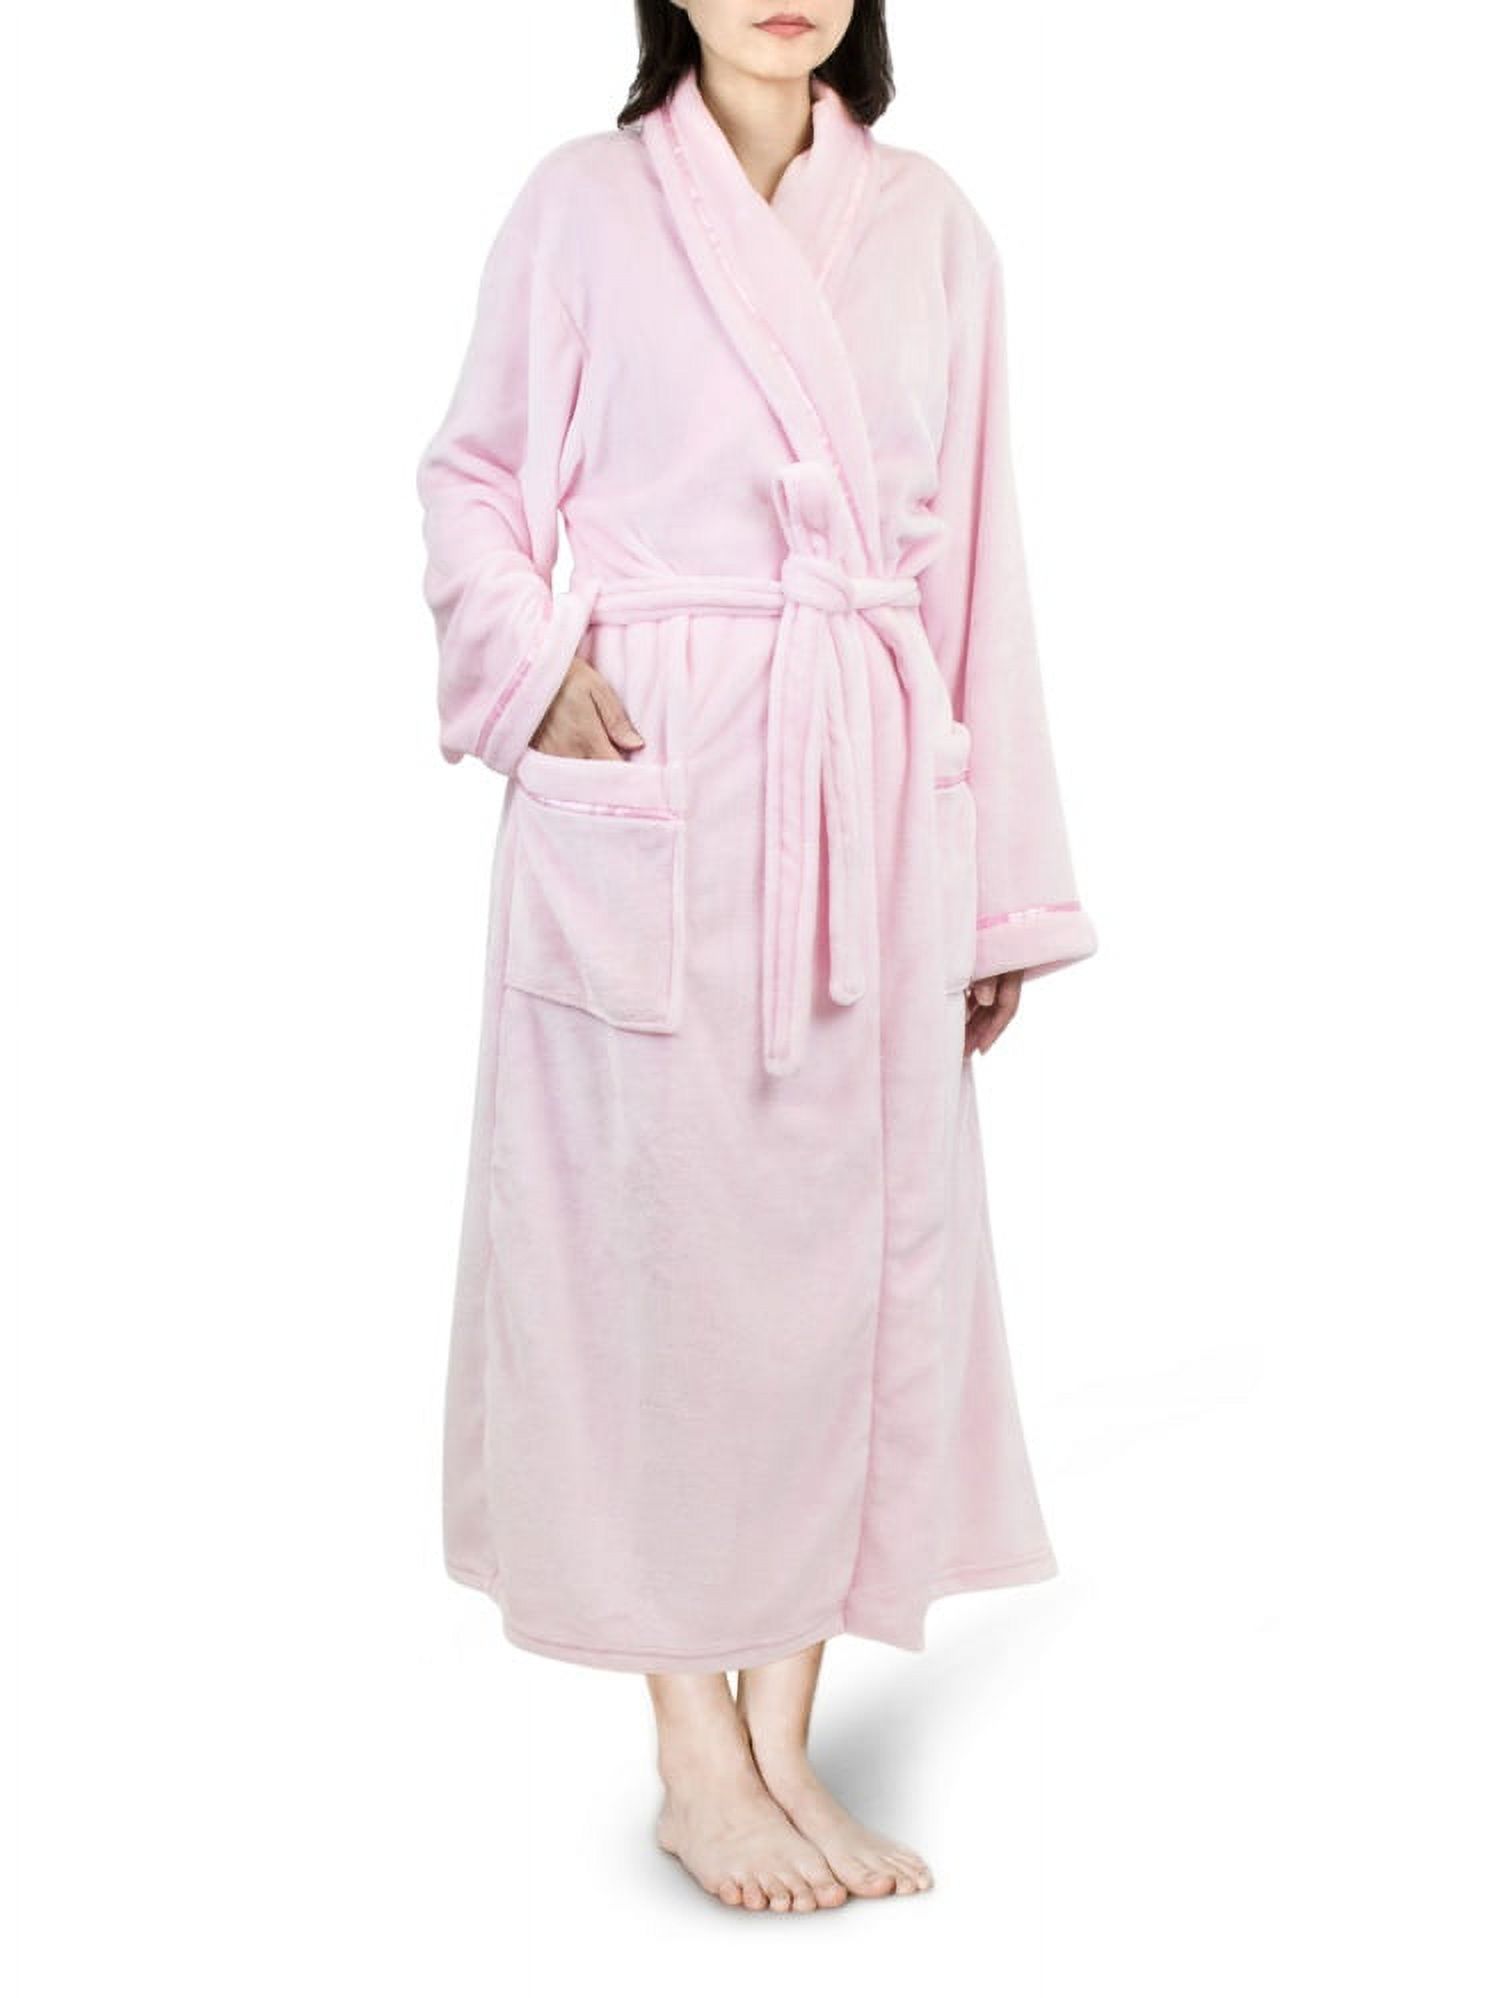 PAVILIA Plush Robe For Women, Pink Fluffy Soft Bathrobe, Lightweight Fuzzy Warm Spa Robe, Cozy Fleece Long House Robe, Satin Trim, Large-XL - image 1 of 5